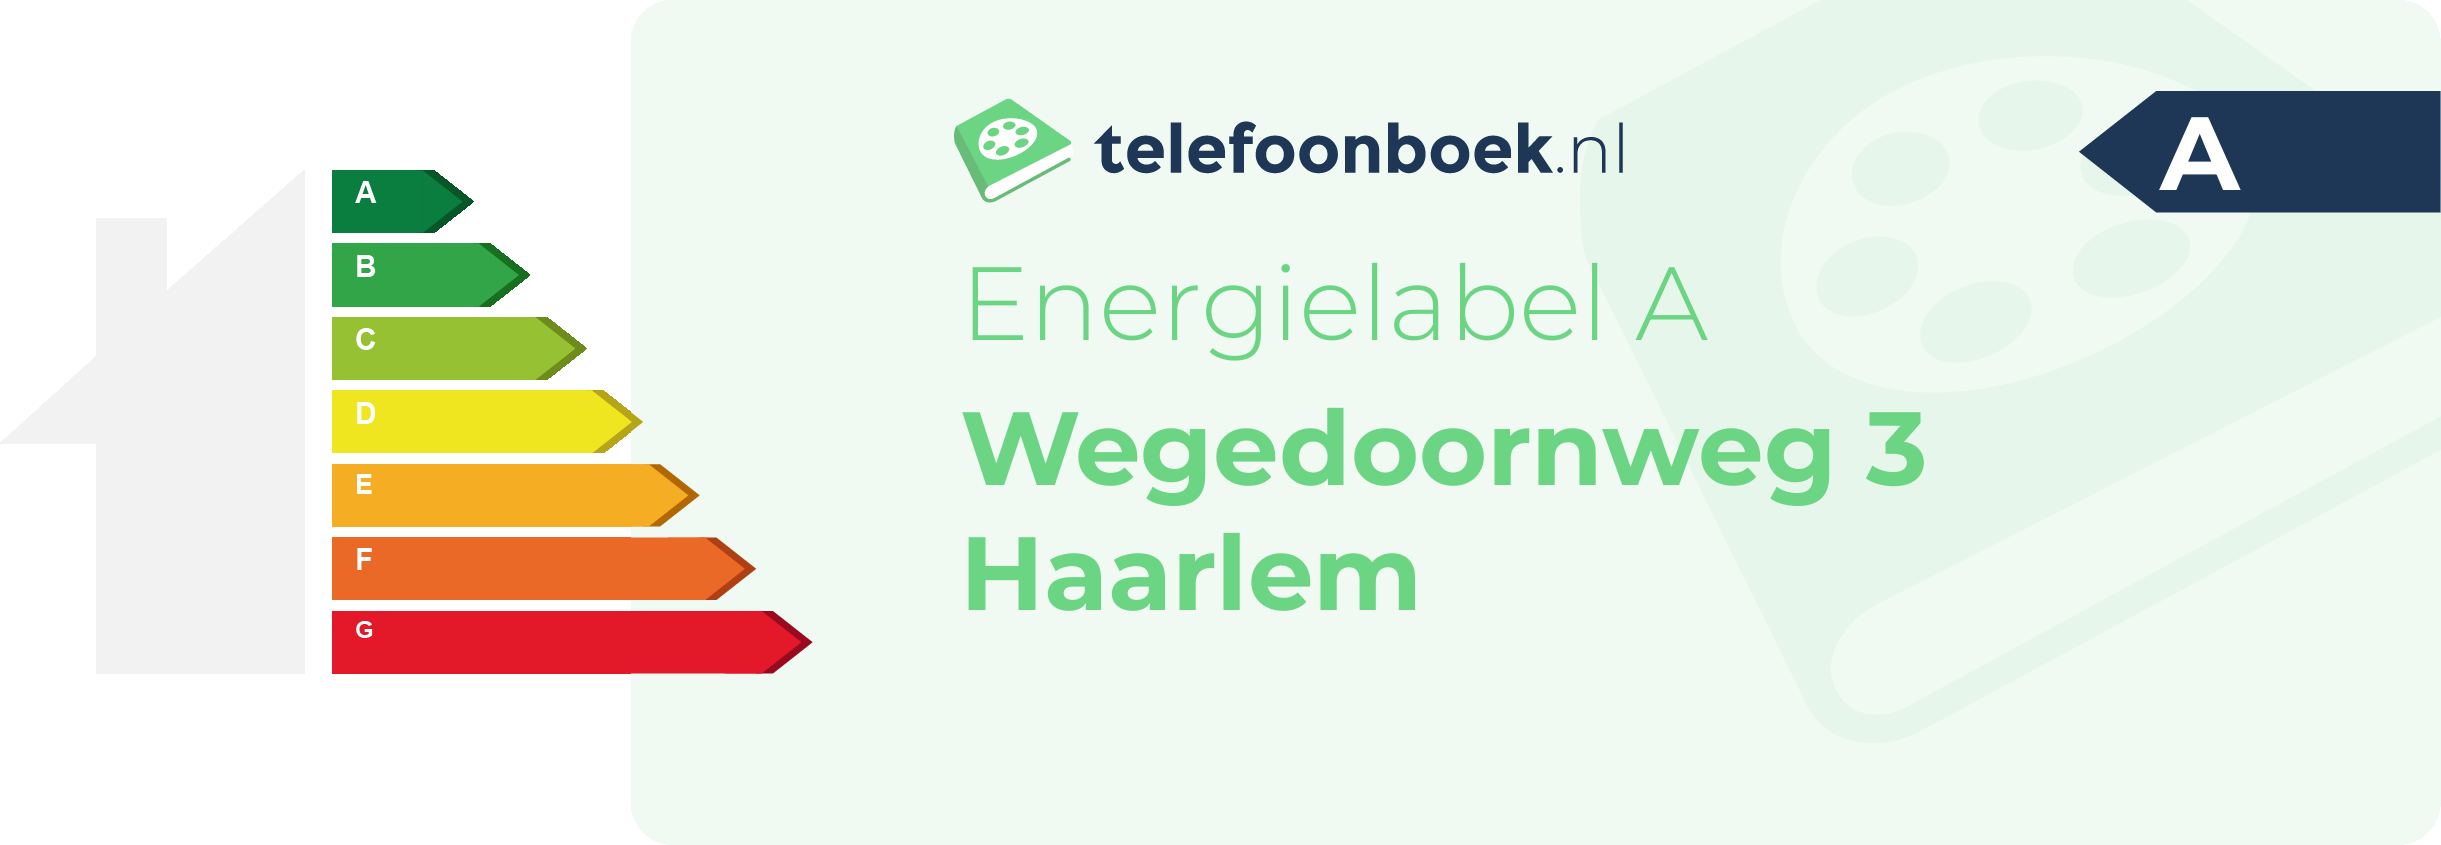 Energielabel Wegedoornweg 3 Haarlem